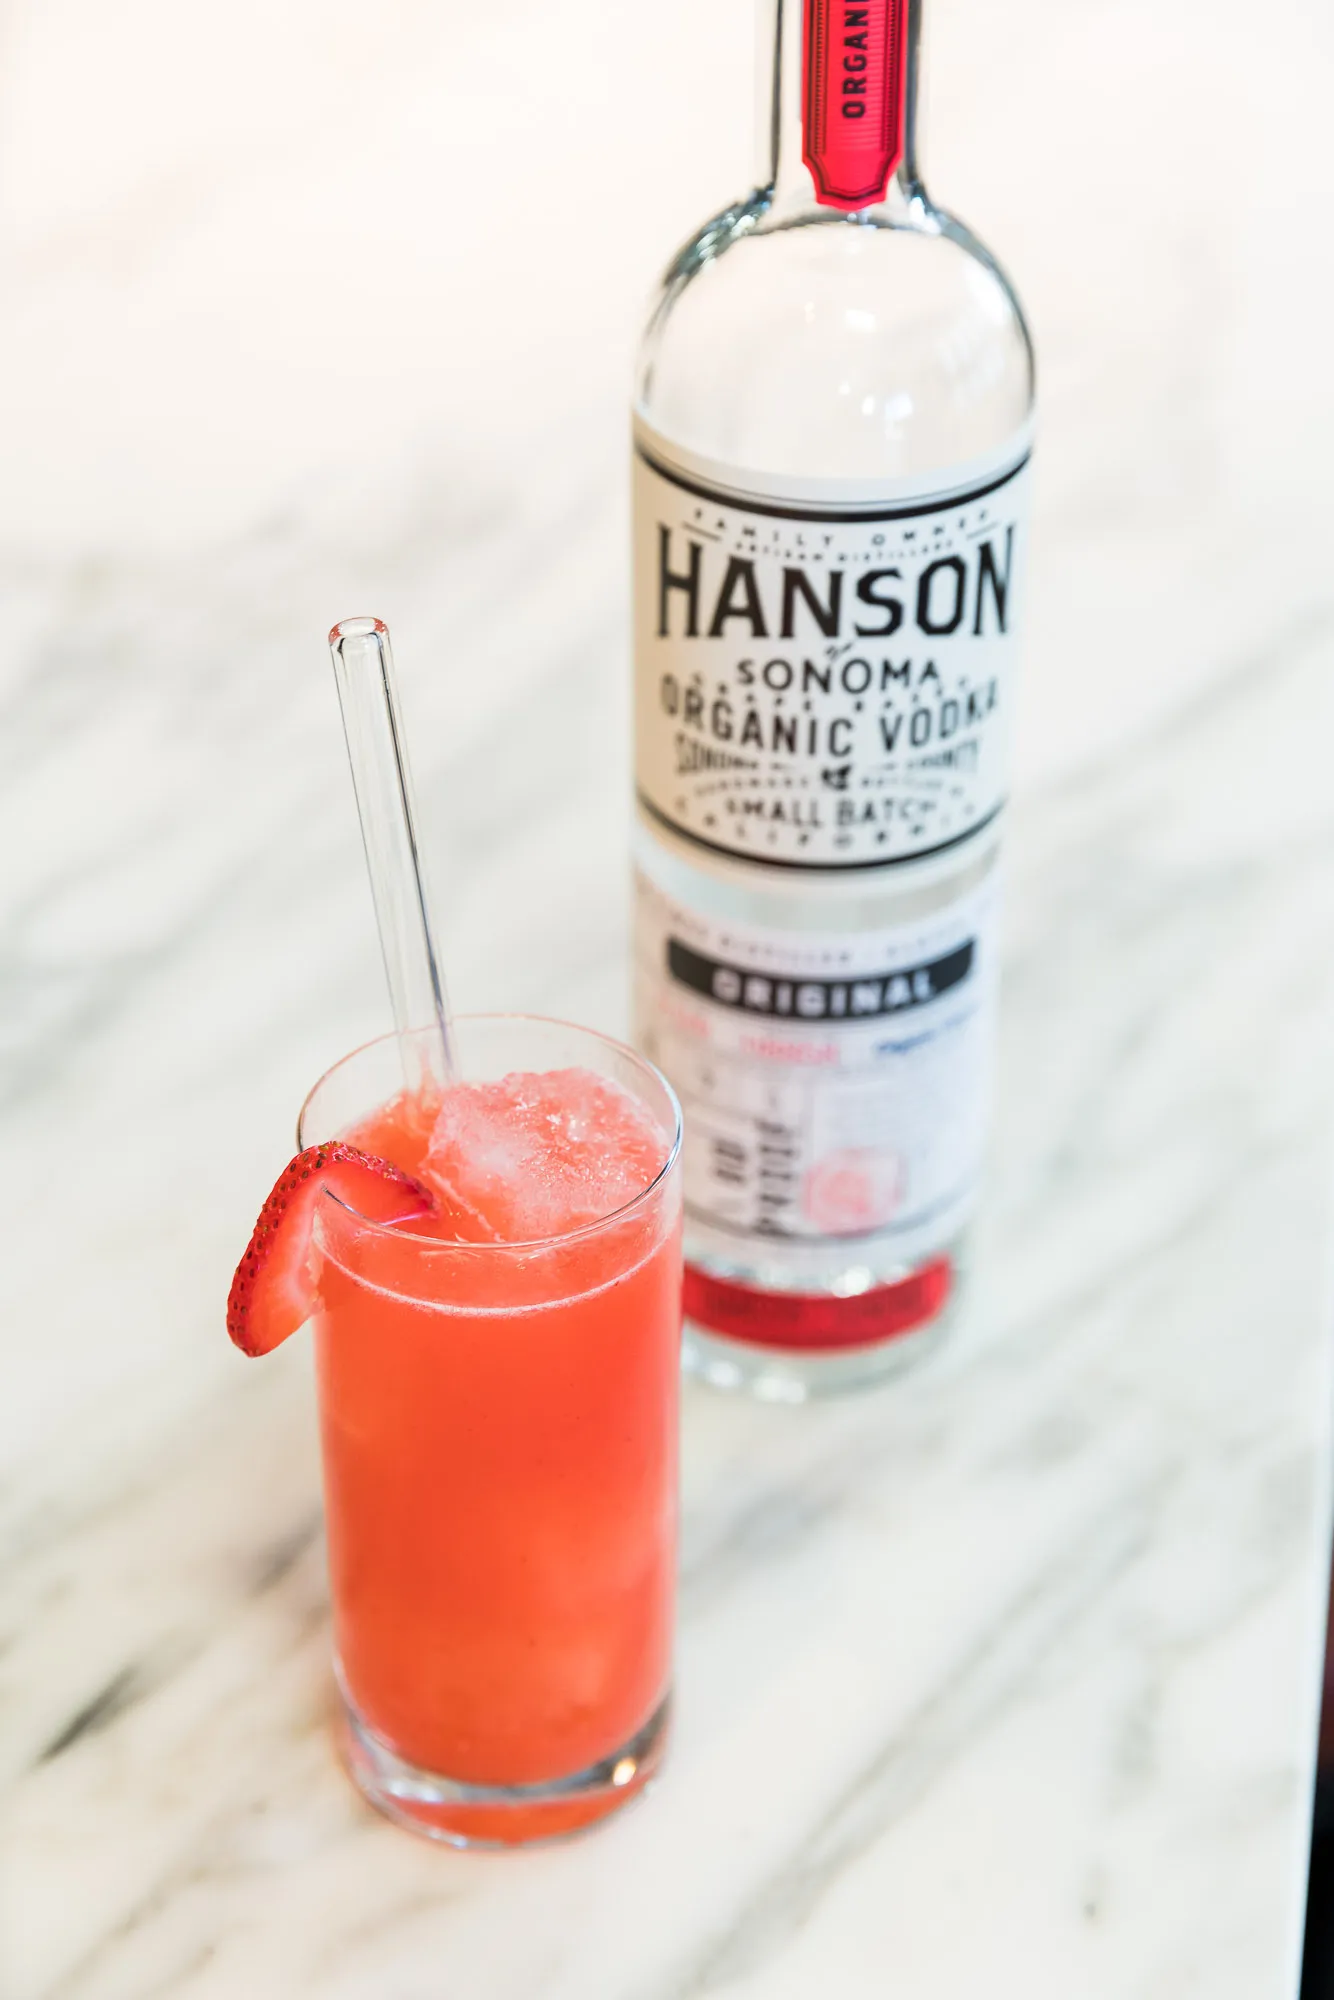 Strawberry gingerade cocktail made using Hanson Original Vodka